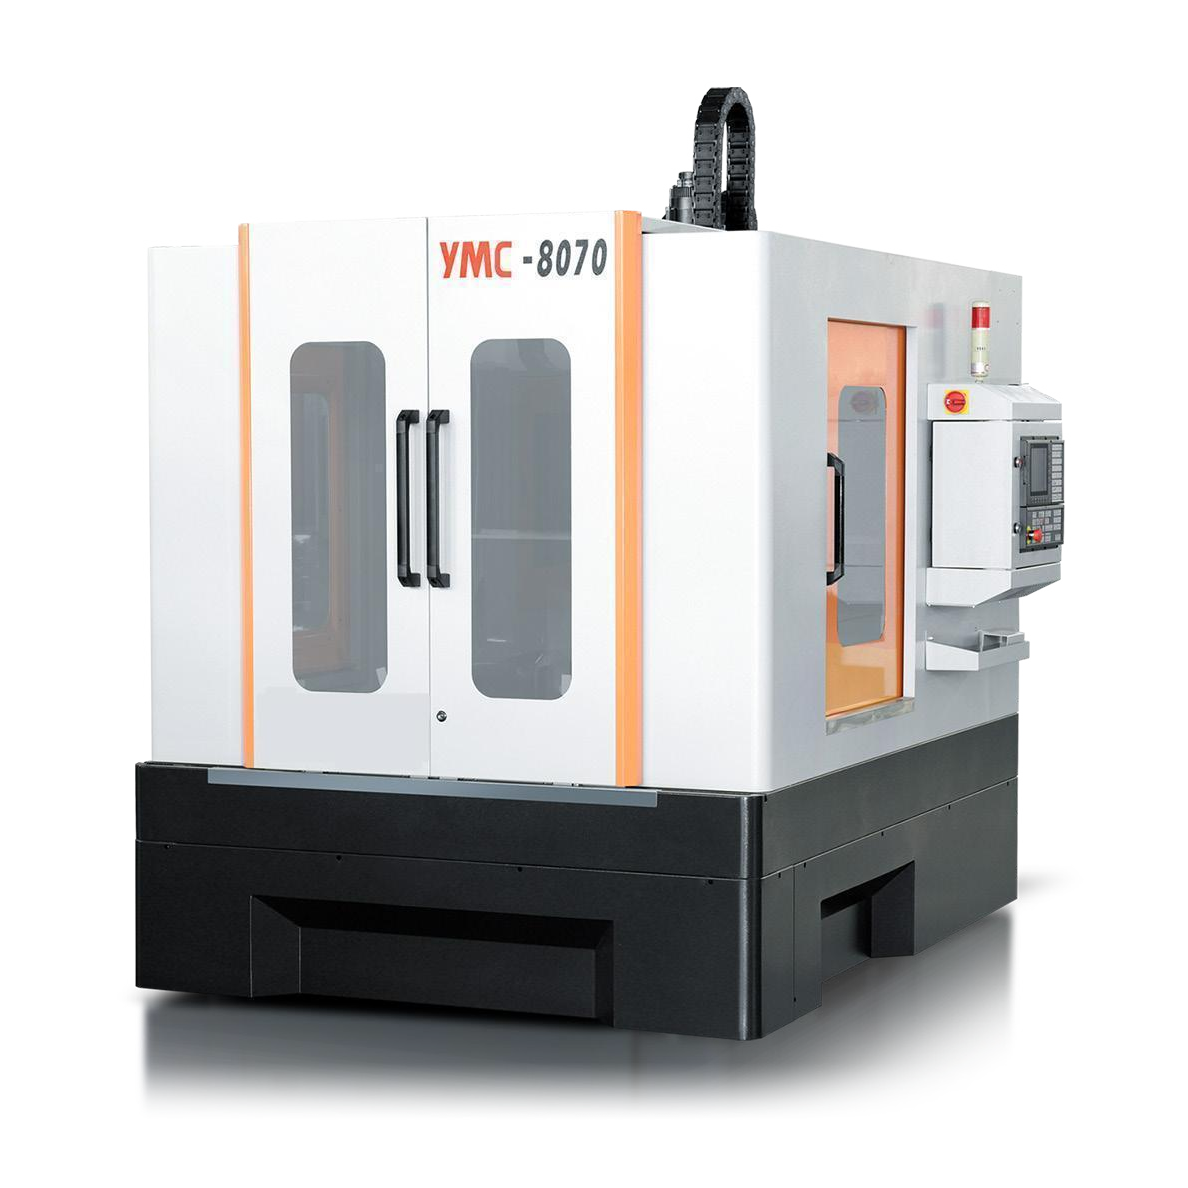 TSUENSAINT YMC Series CNC Engraving and Milling Machine